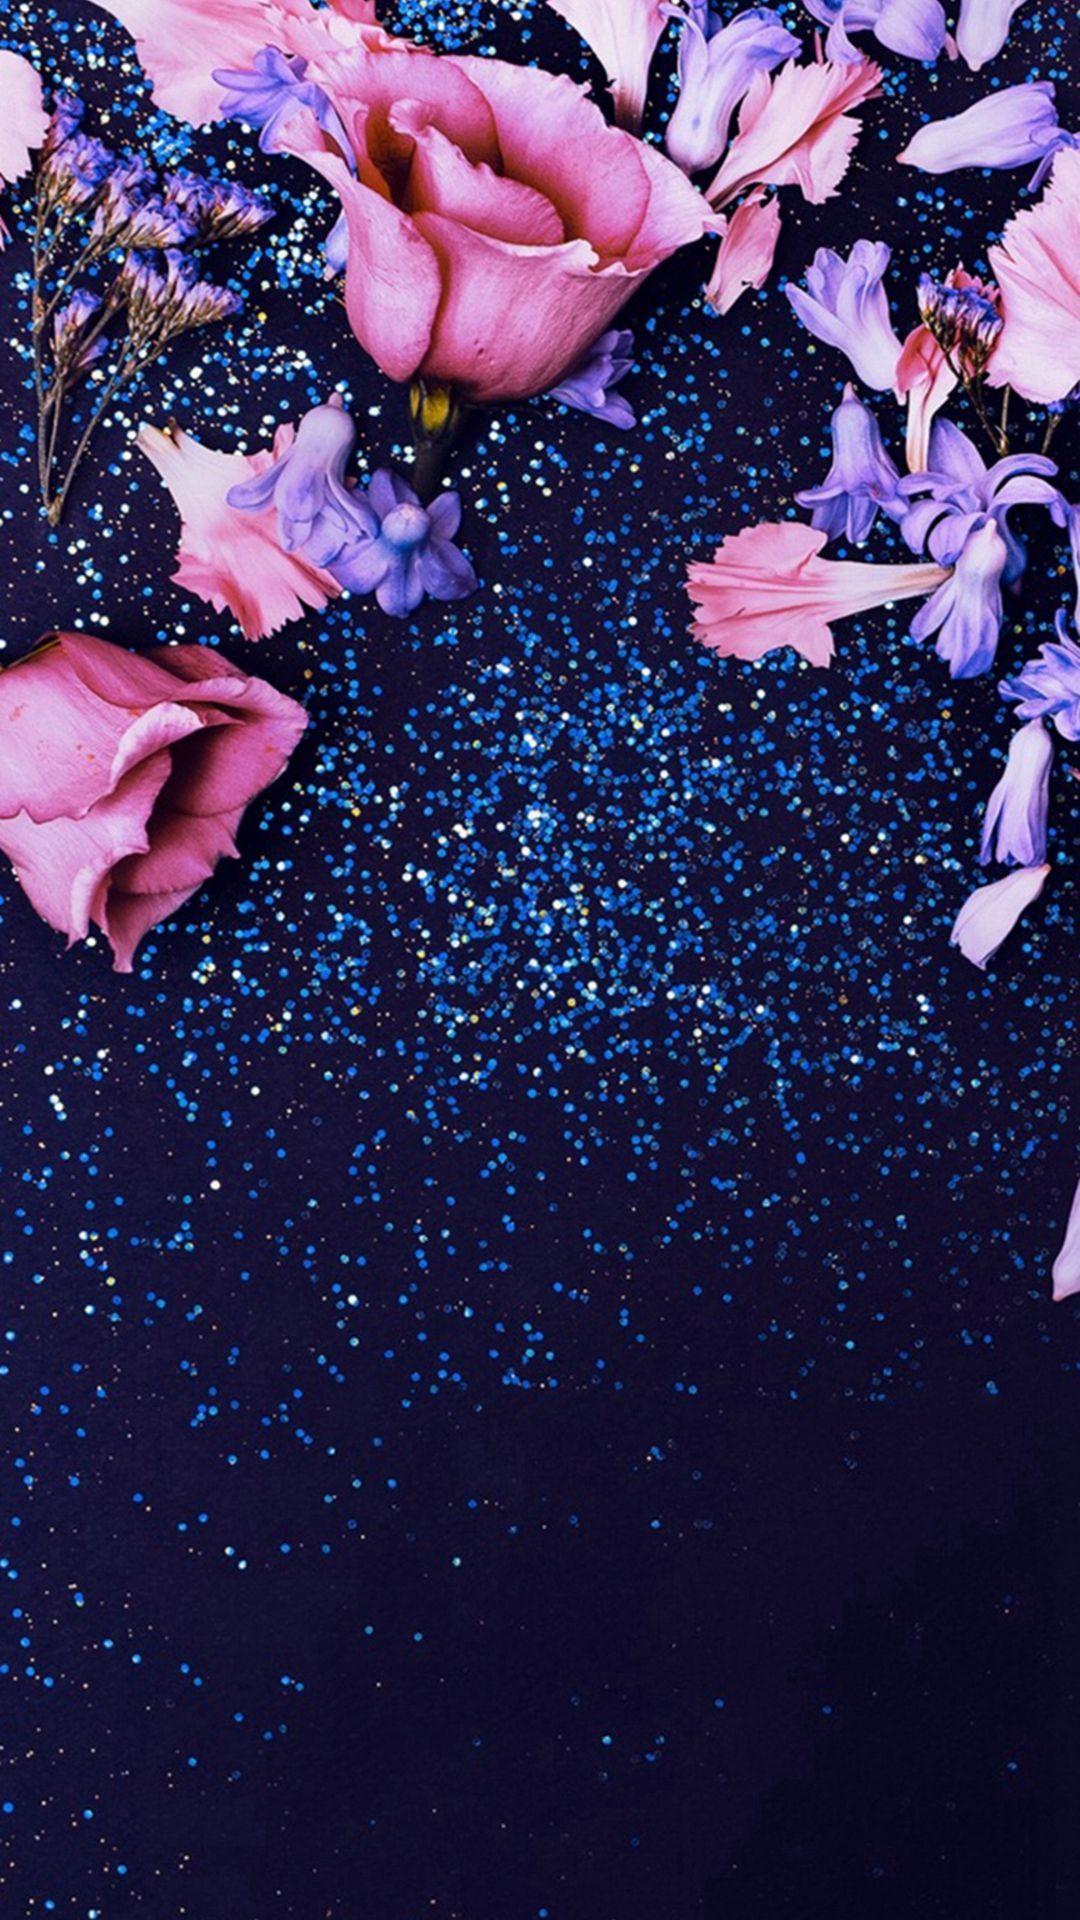 Flower Glitter iPhone Wallpapers - Top